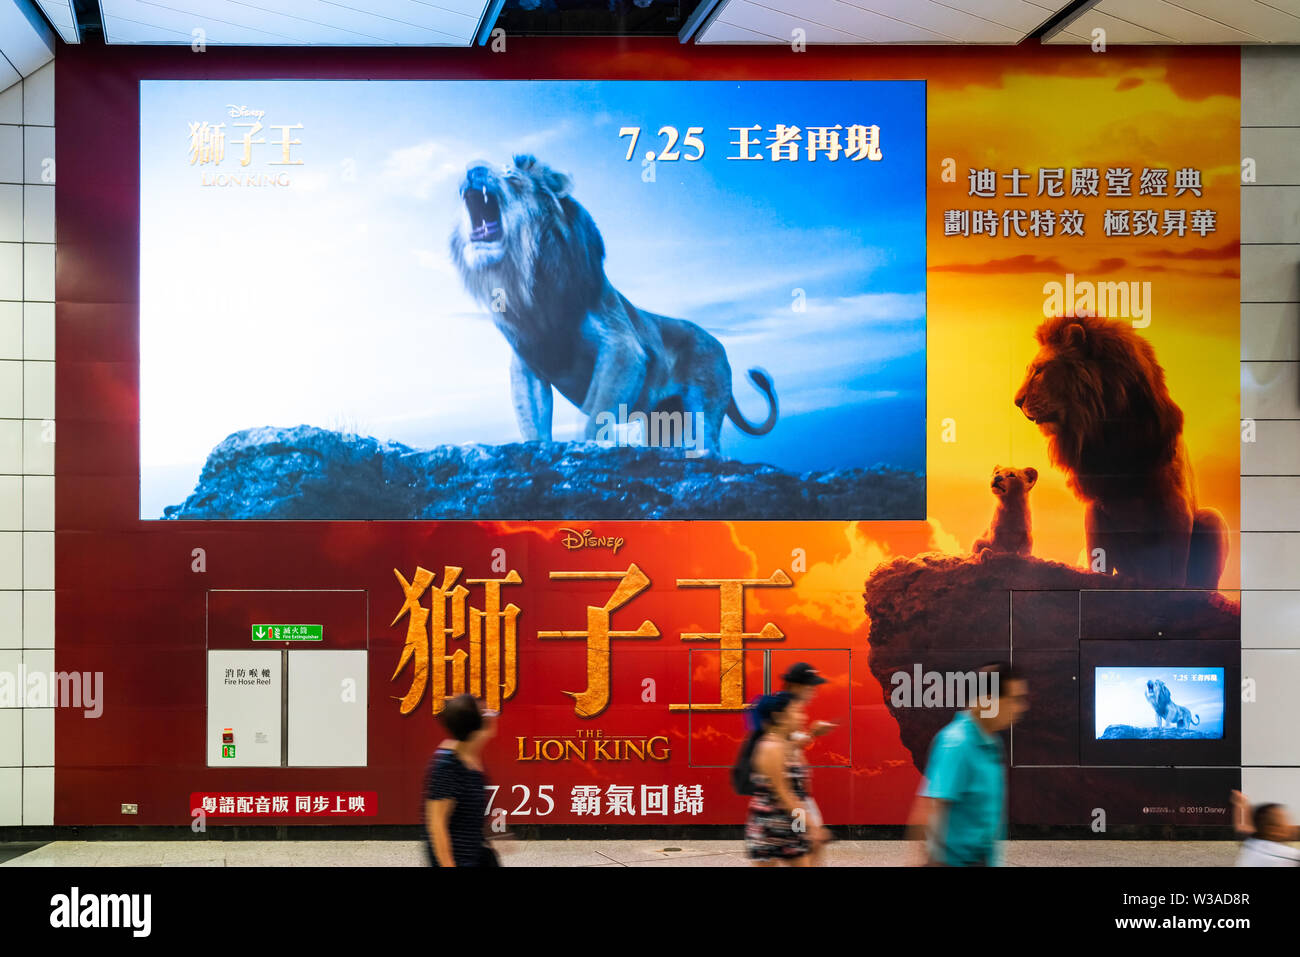 Hong Kong, Hong Kong - Jul 10, 2019: Lion King big movie poster and large TV screen showing movie trailer in public subway walkway. Cinema promotional Stock Photo